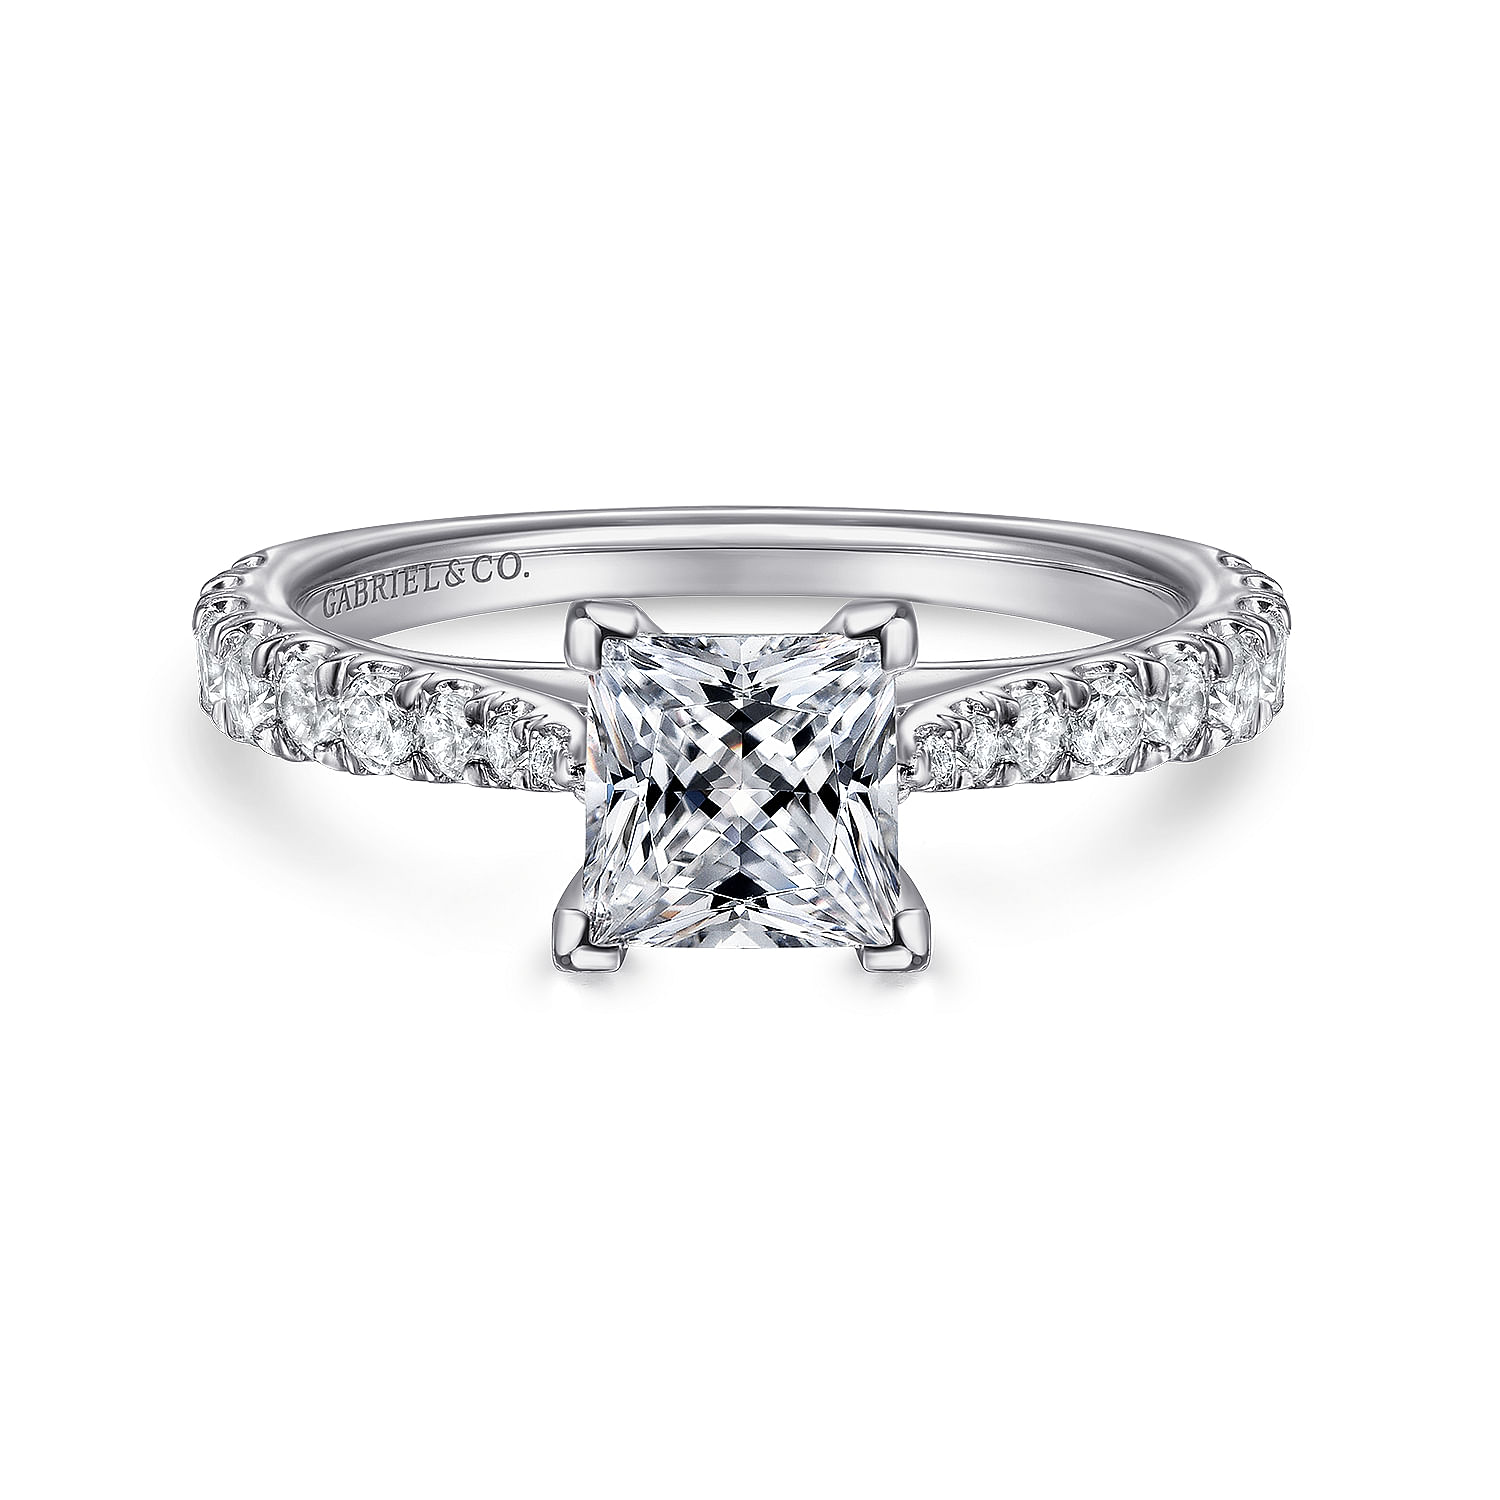 Avery---14K-White-Gold-Princess-Cut-Diamond-Engagement-Ring1